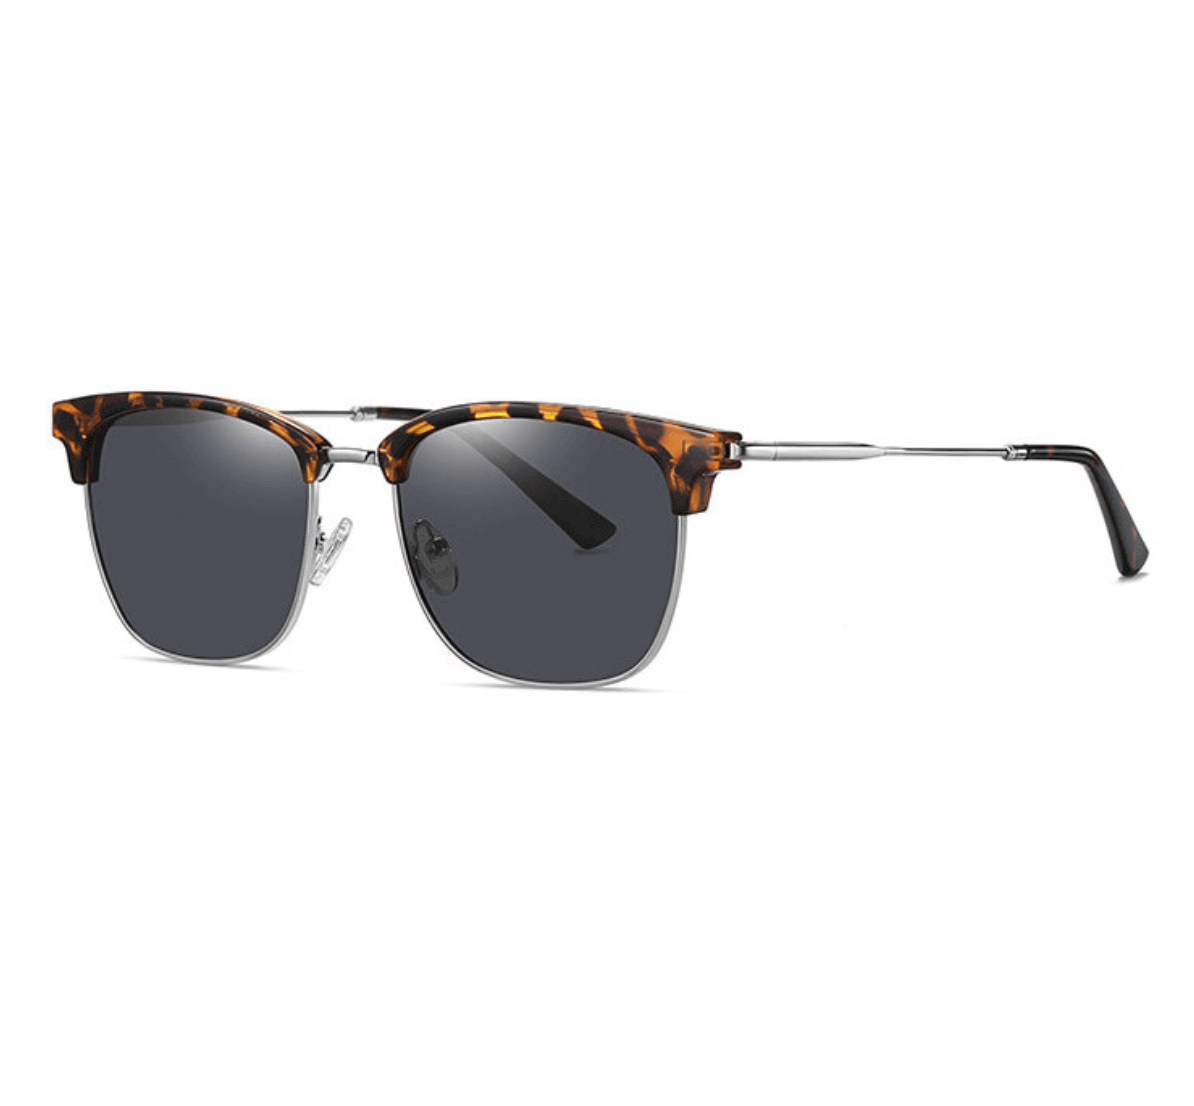 polarized wholesale sunglasses, trendy eyebrow sunglasses, polarized sunglasses China, bulk polarized sunglasses, sunglasses supplier